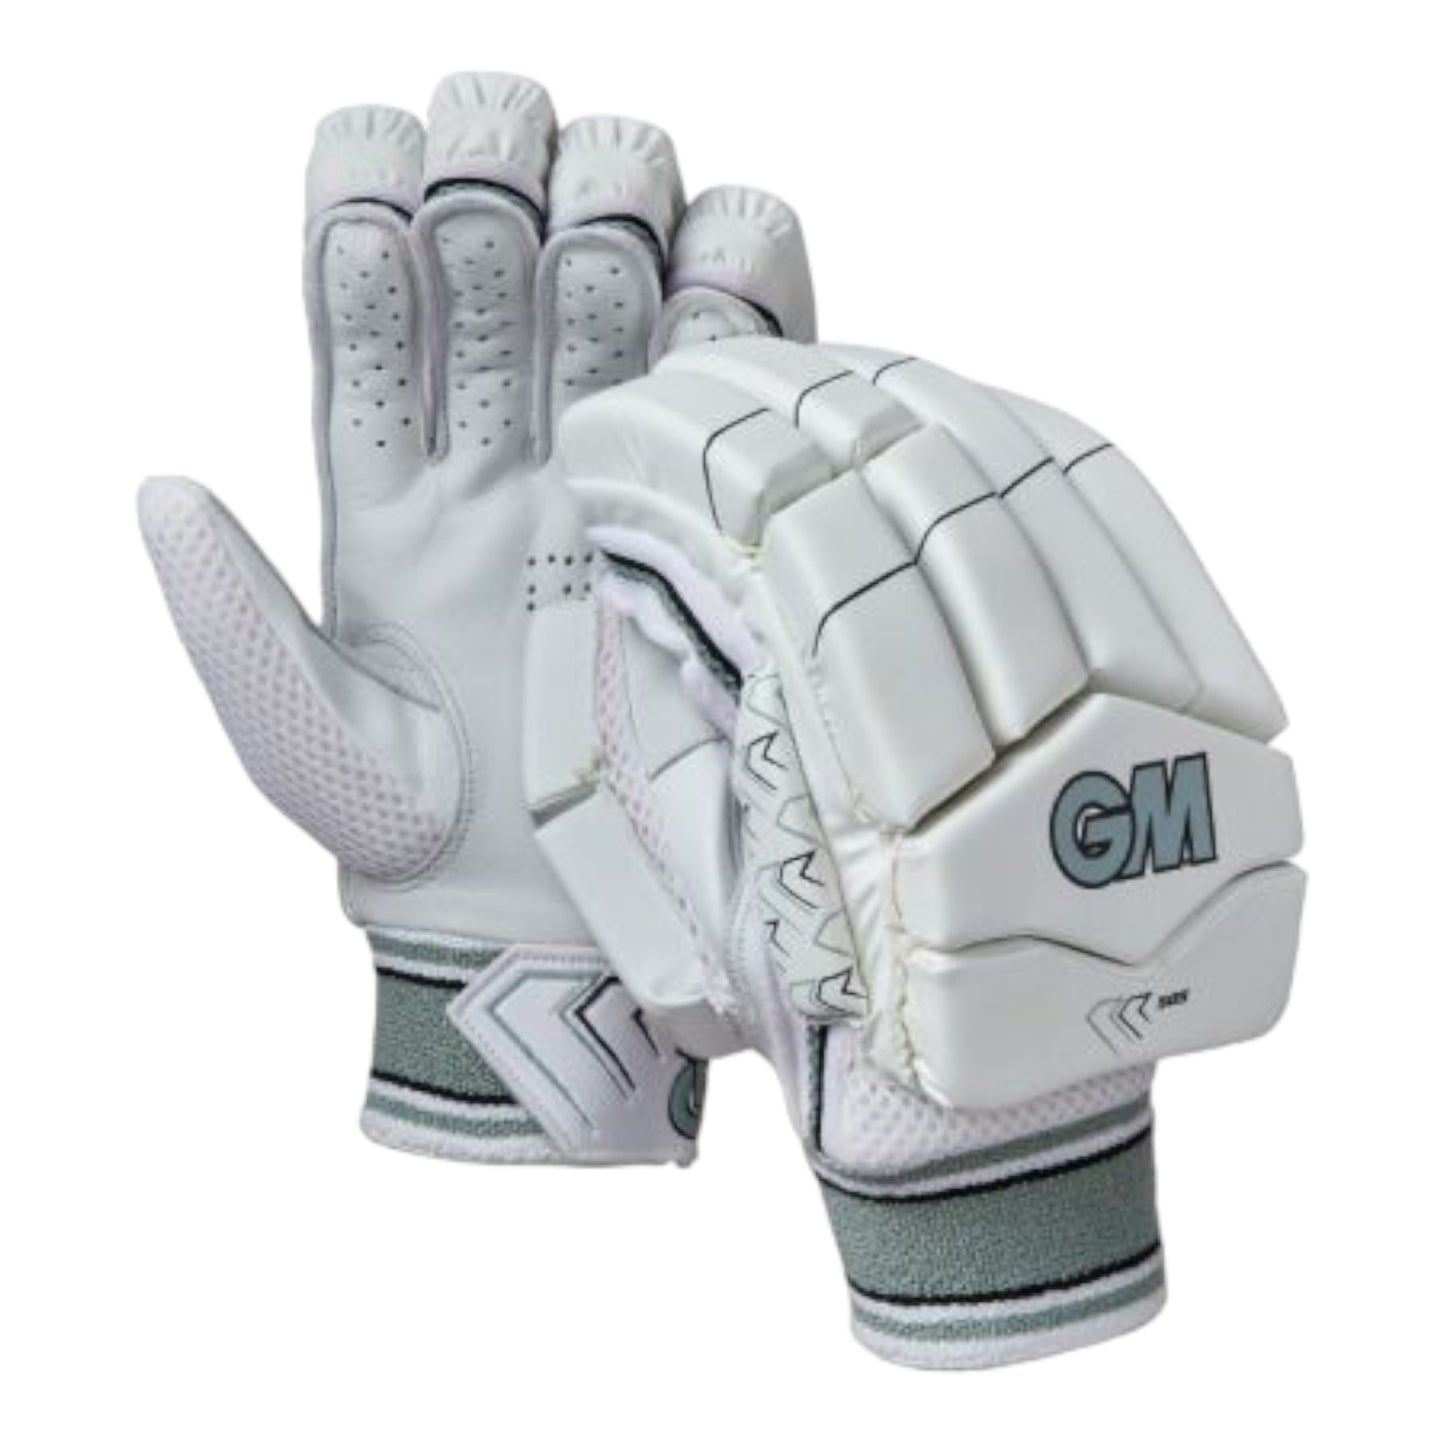 GM 505 Batting Glove